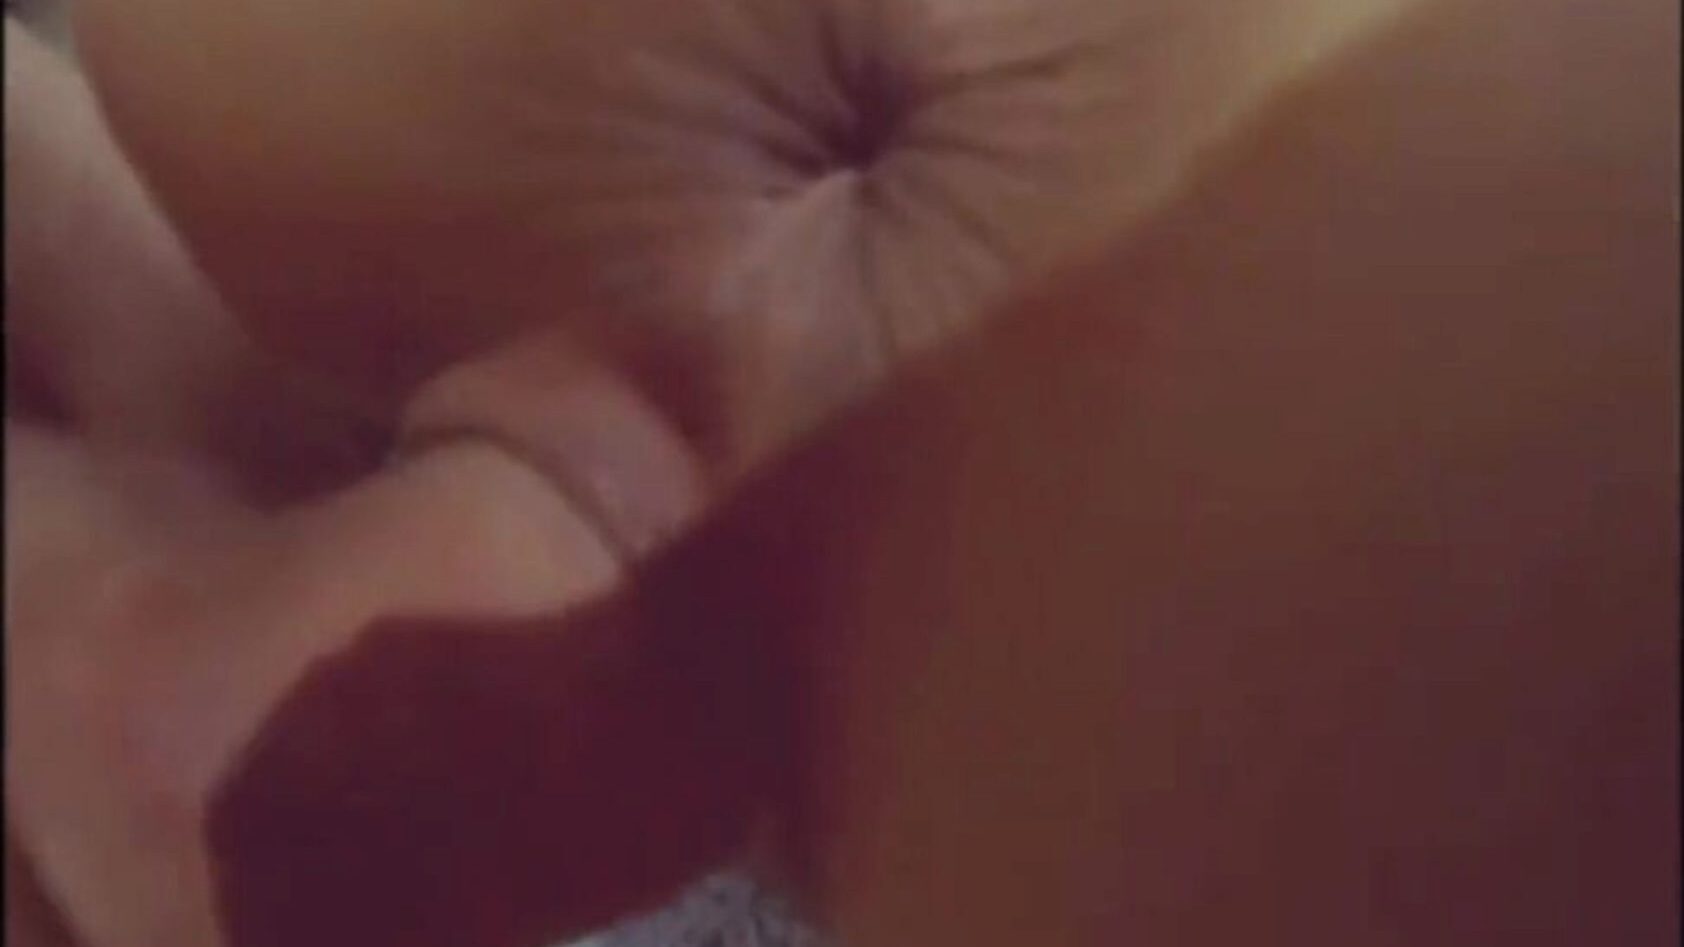 divlji snažni kurac unutra na njezinu macu - otvorene rupe! instagram - skinnyhotboygr